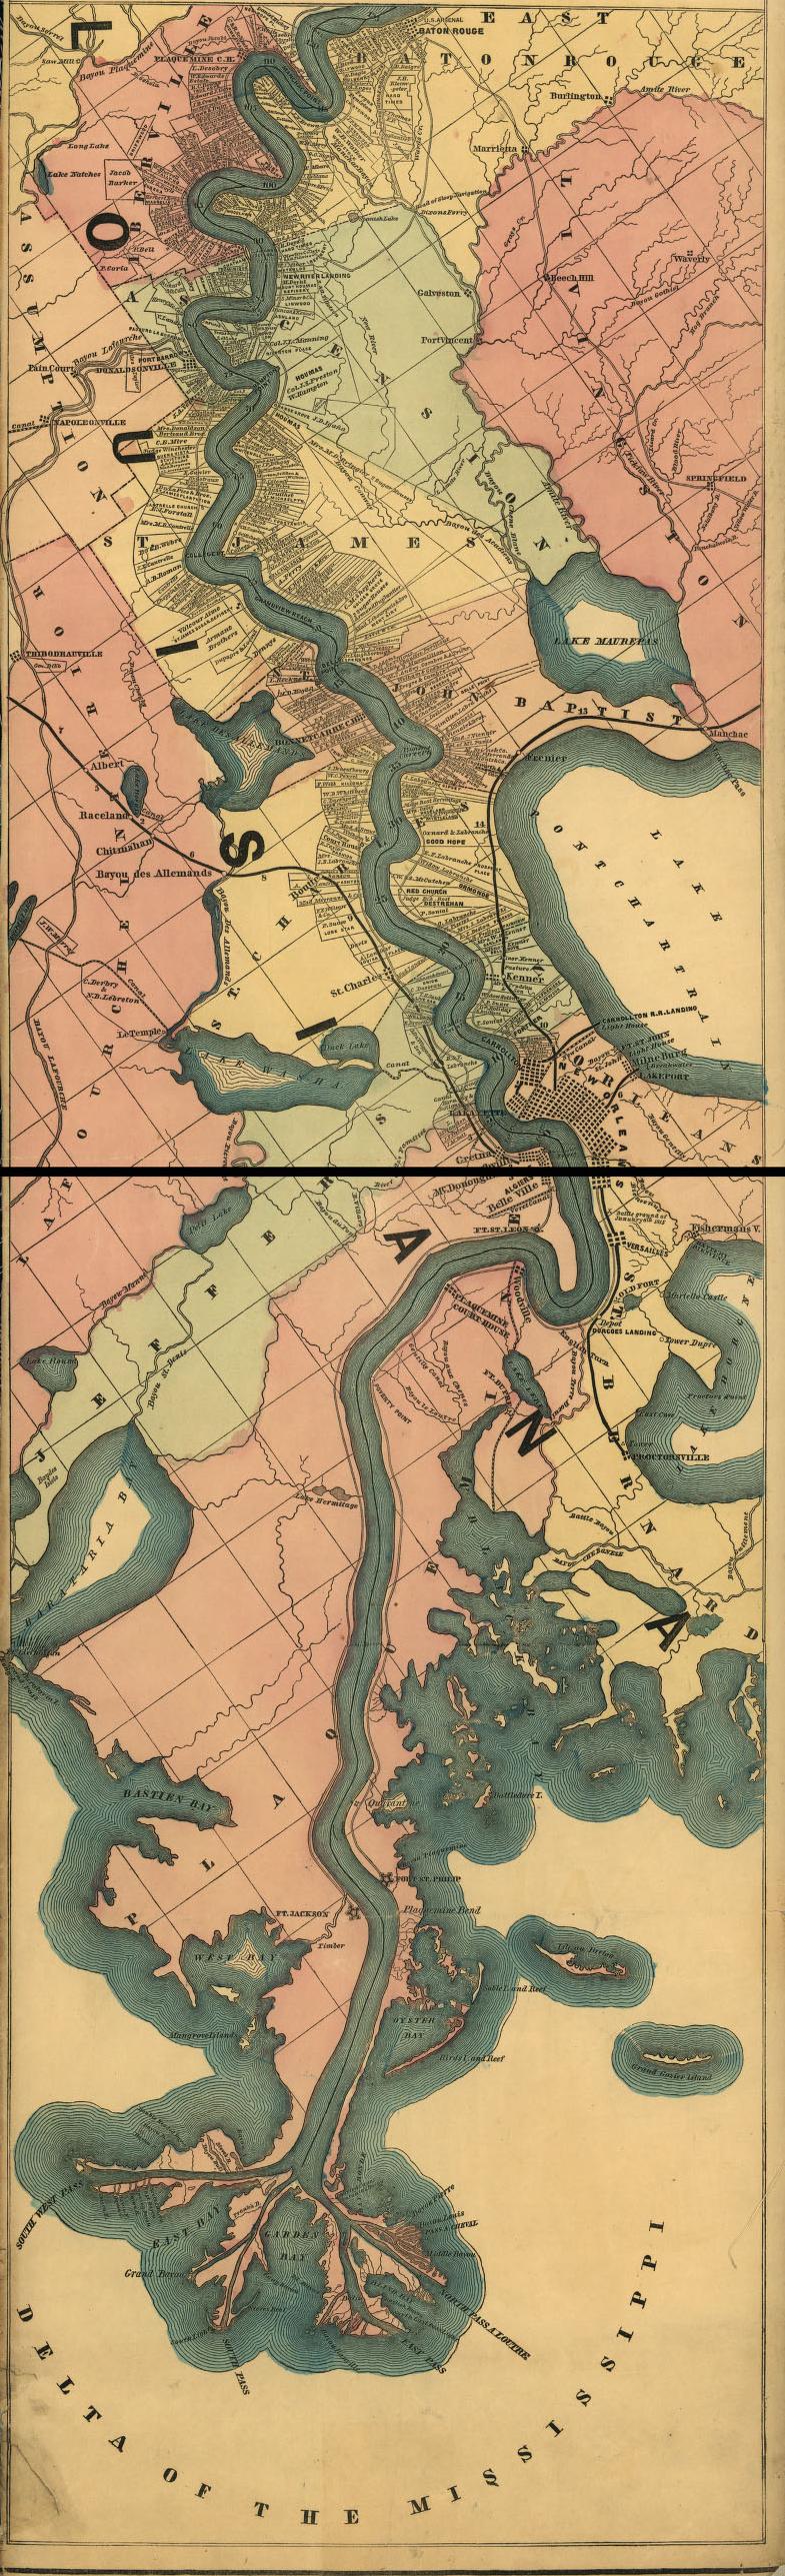 1862 shows Carrolton Railroad Landing,  New Canal Light, Fort St. John Light, Milneburg, and Lakeport